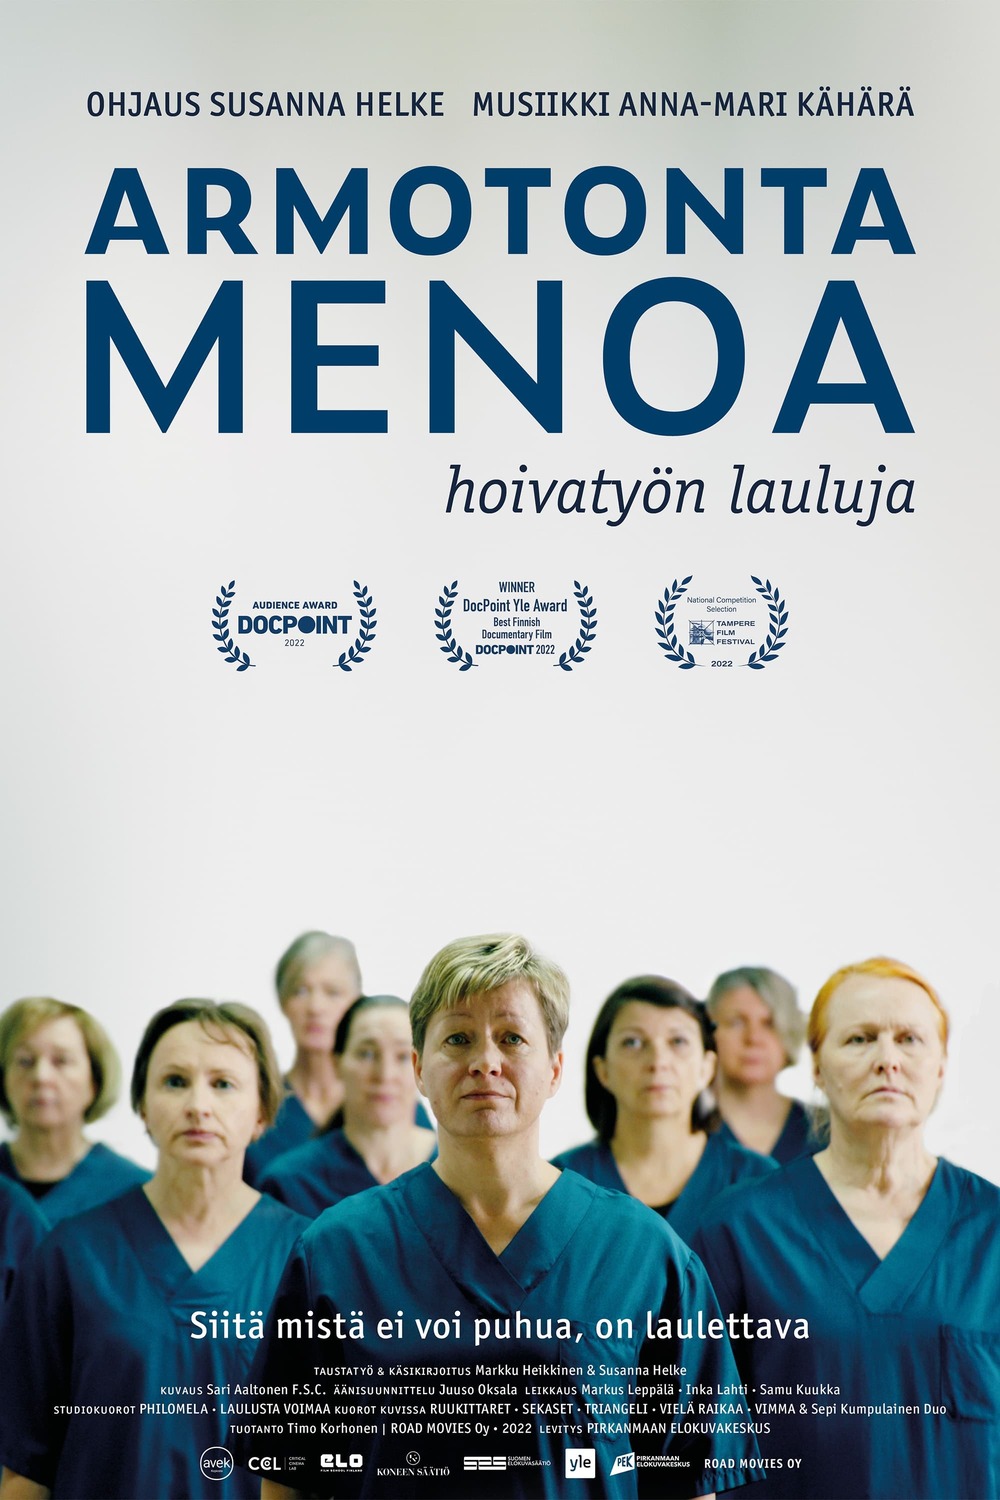 Extra Large Movie Poster Image for Armotonta menoa - hoivatyön lauluja 